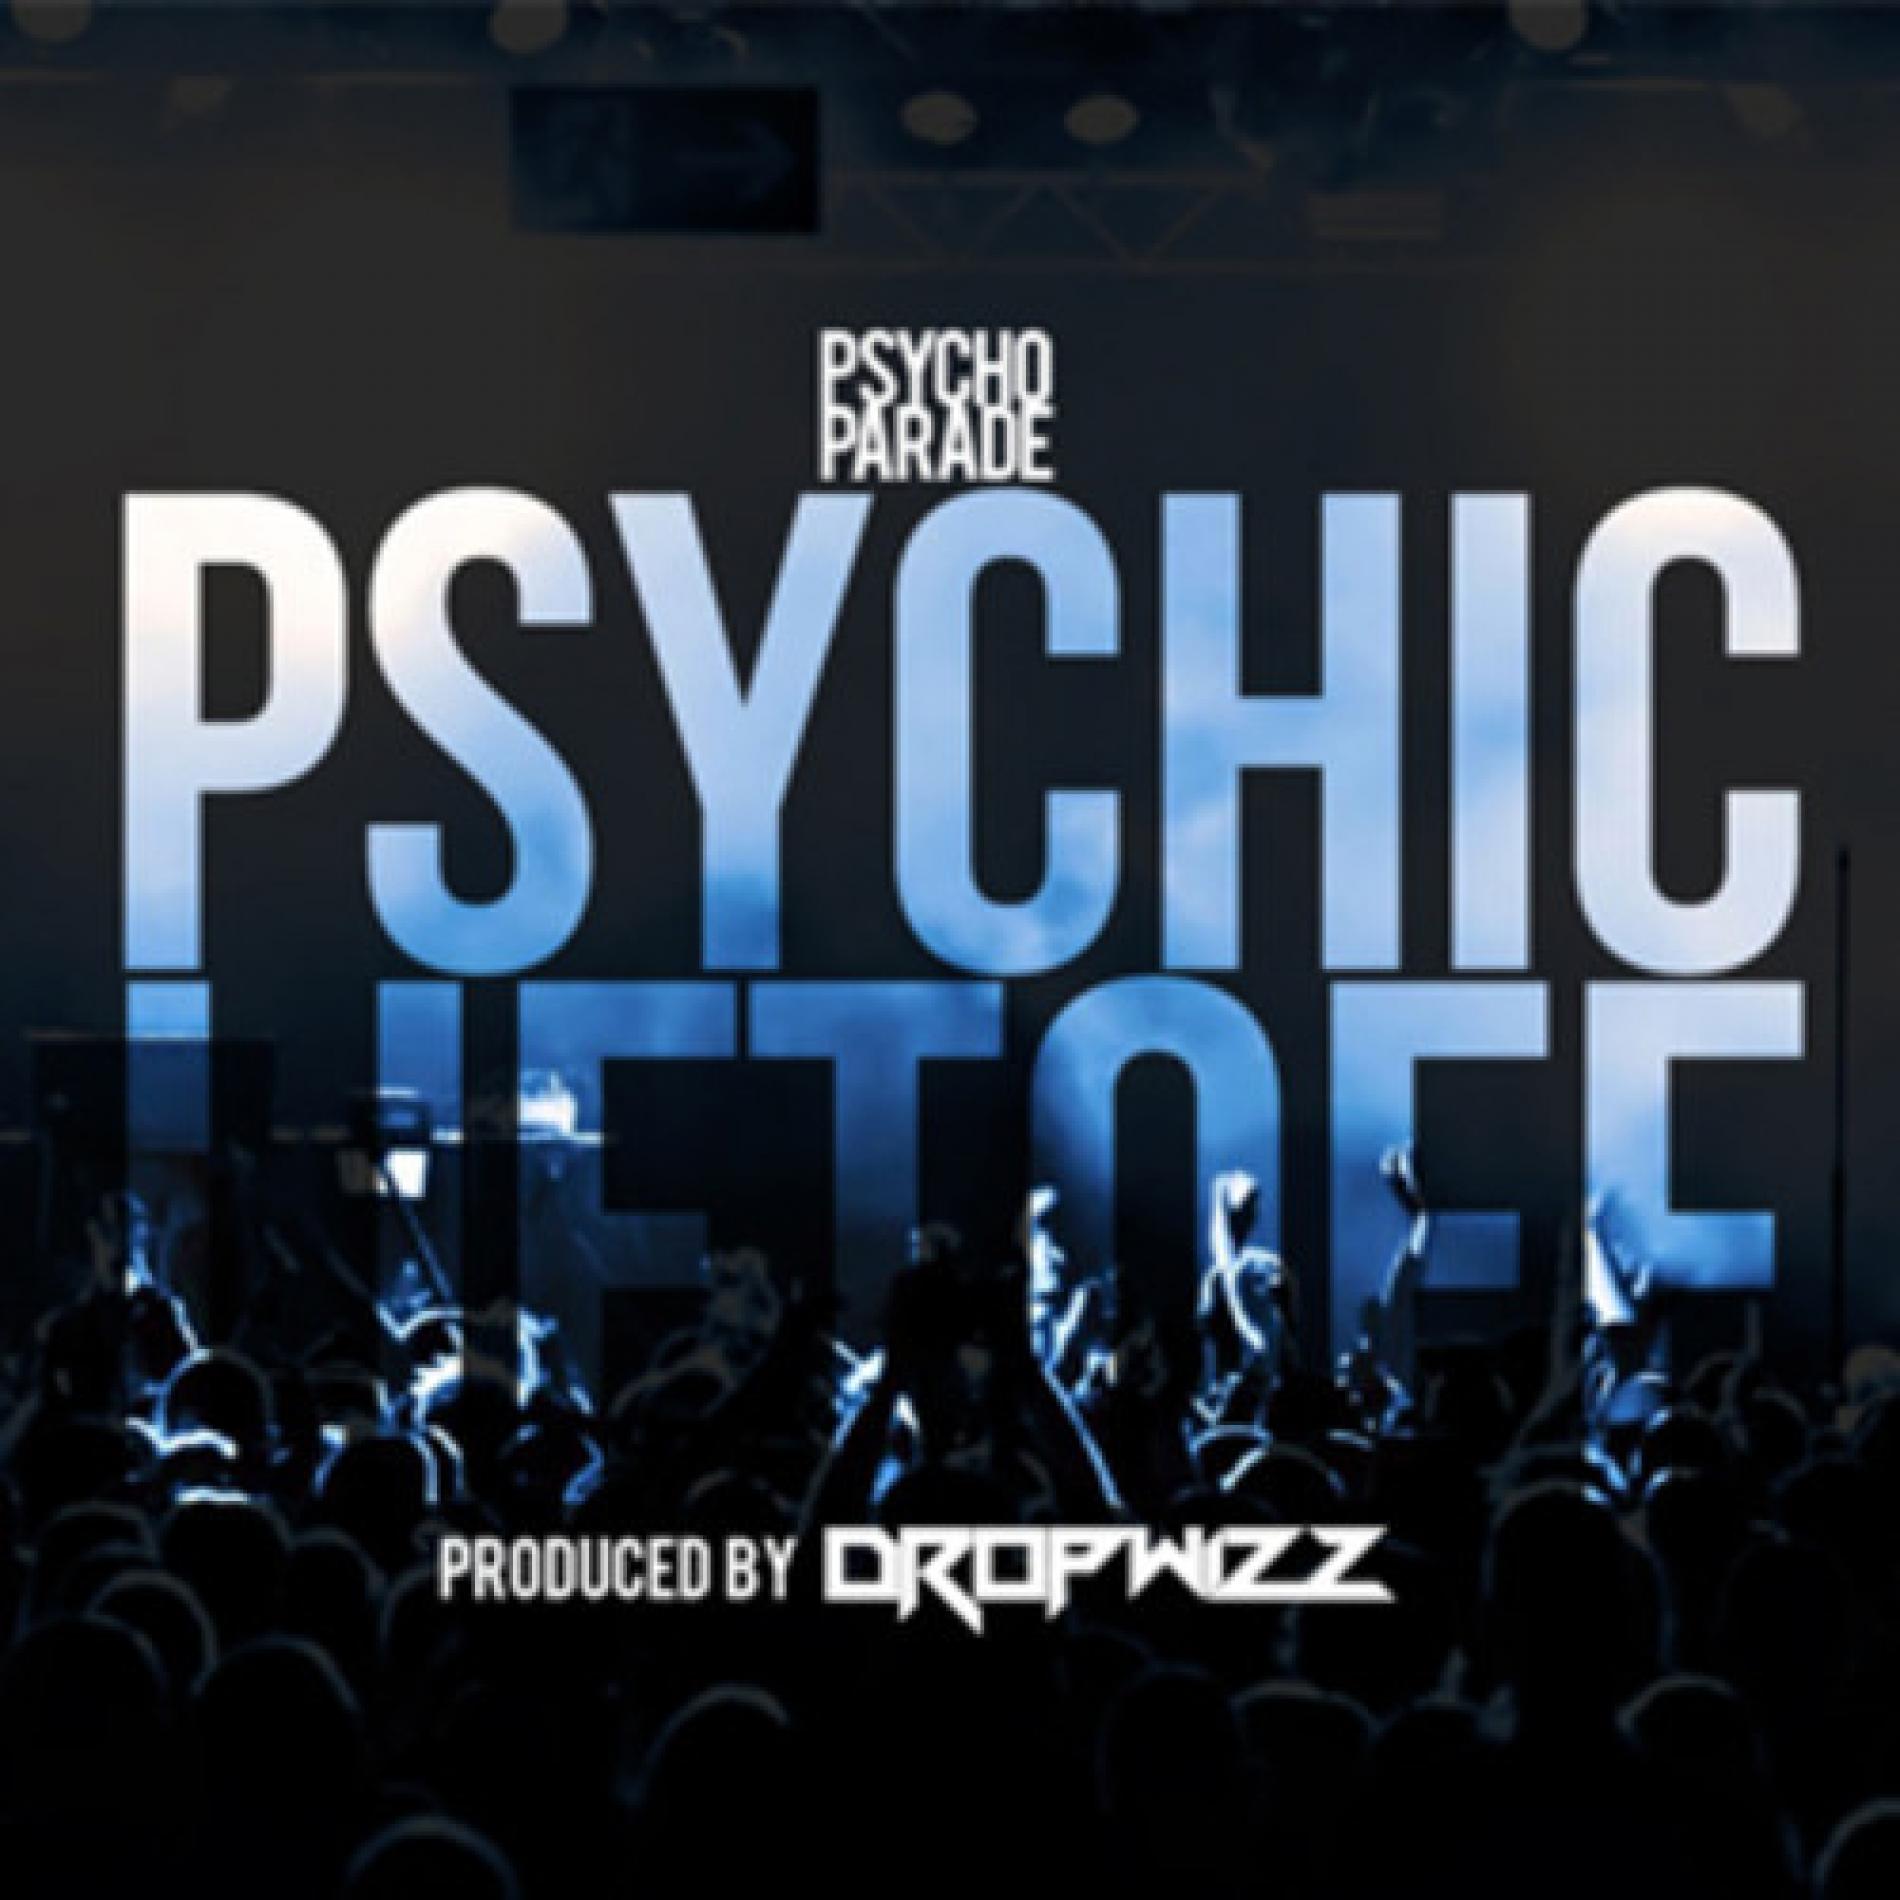 Dropwizz: Psychic Liftoff // Psycho Parade 2014 Anthem